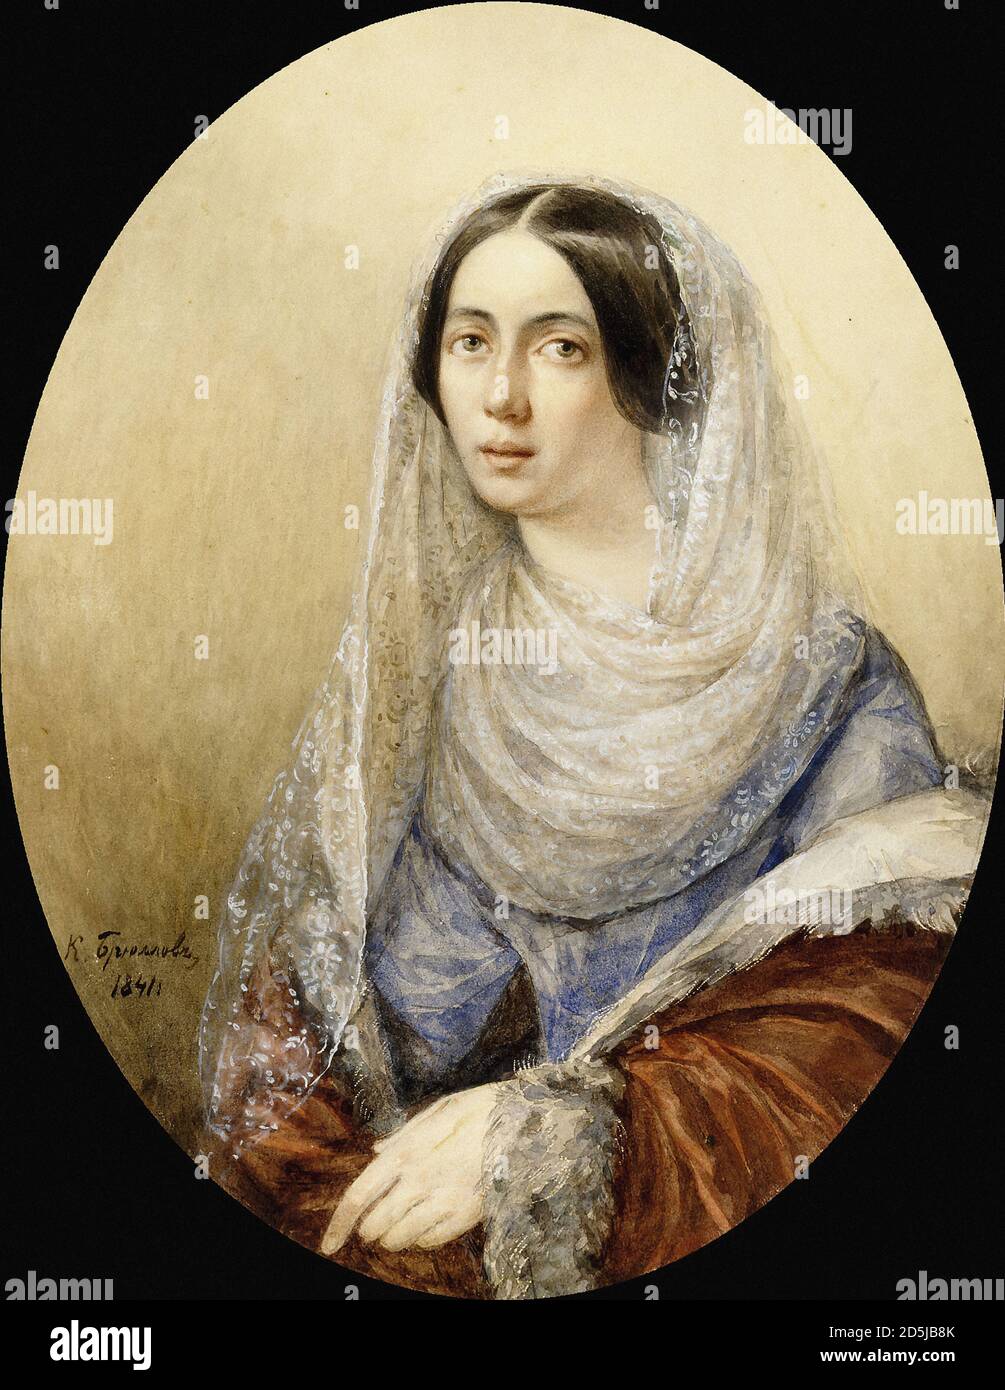 Briullov Karl - Portrait of a Woman - Russian School - 19th  Century Stock Photo